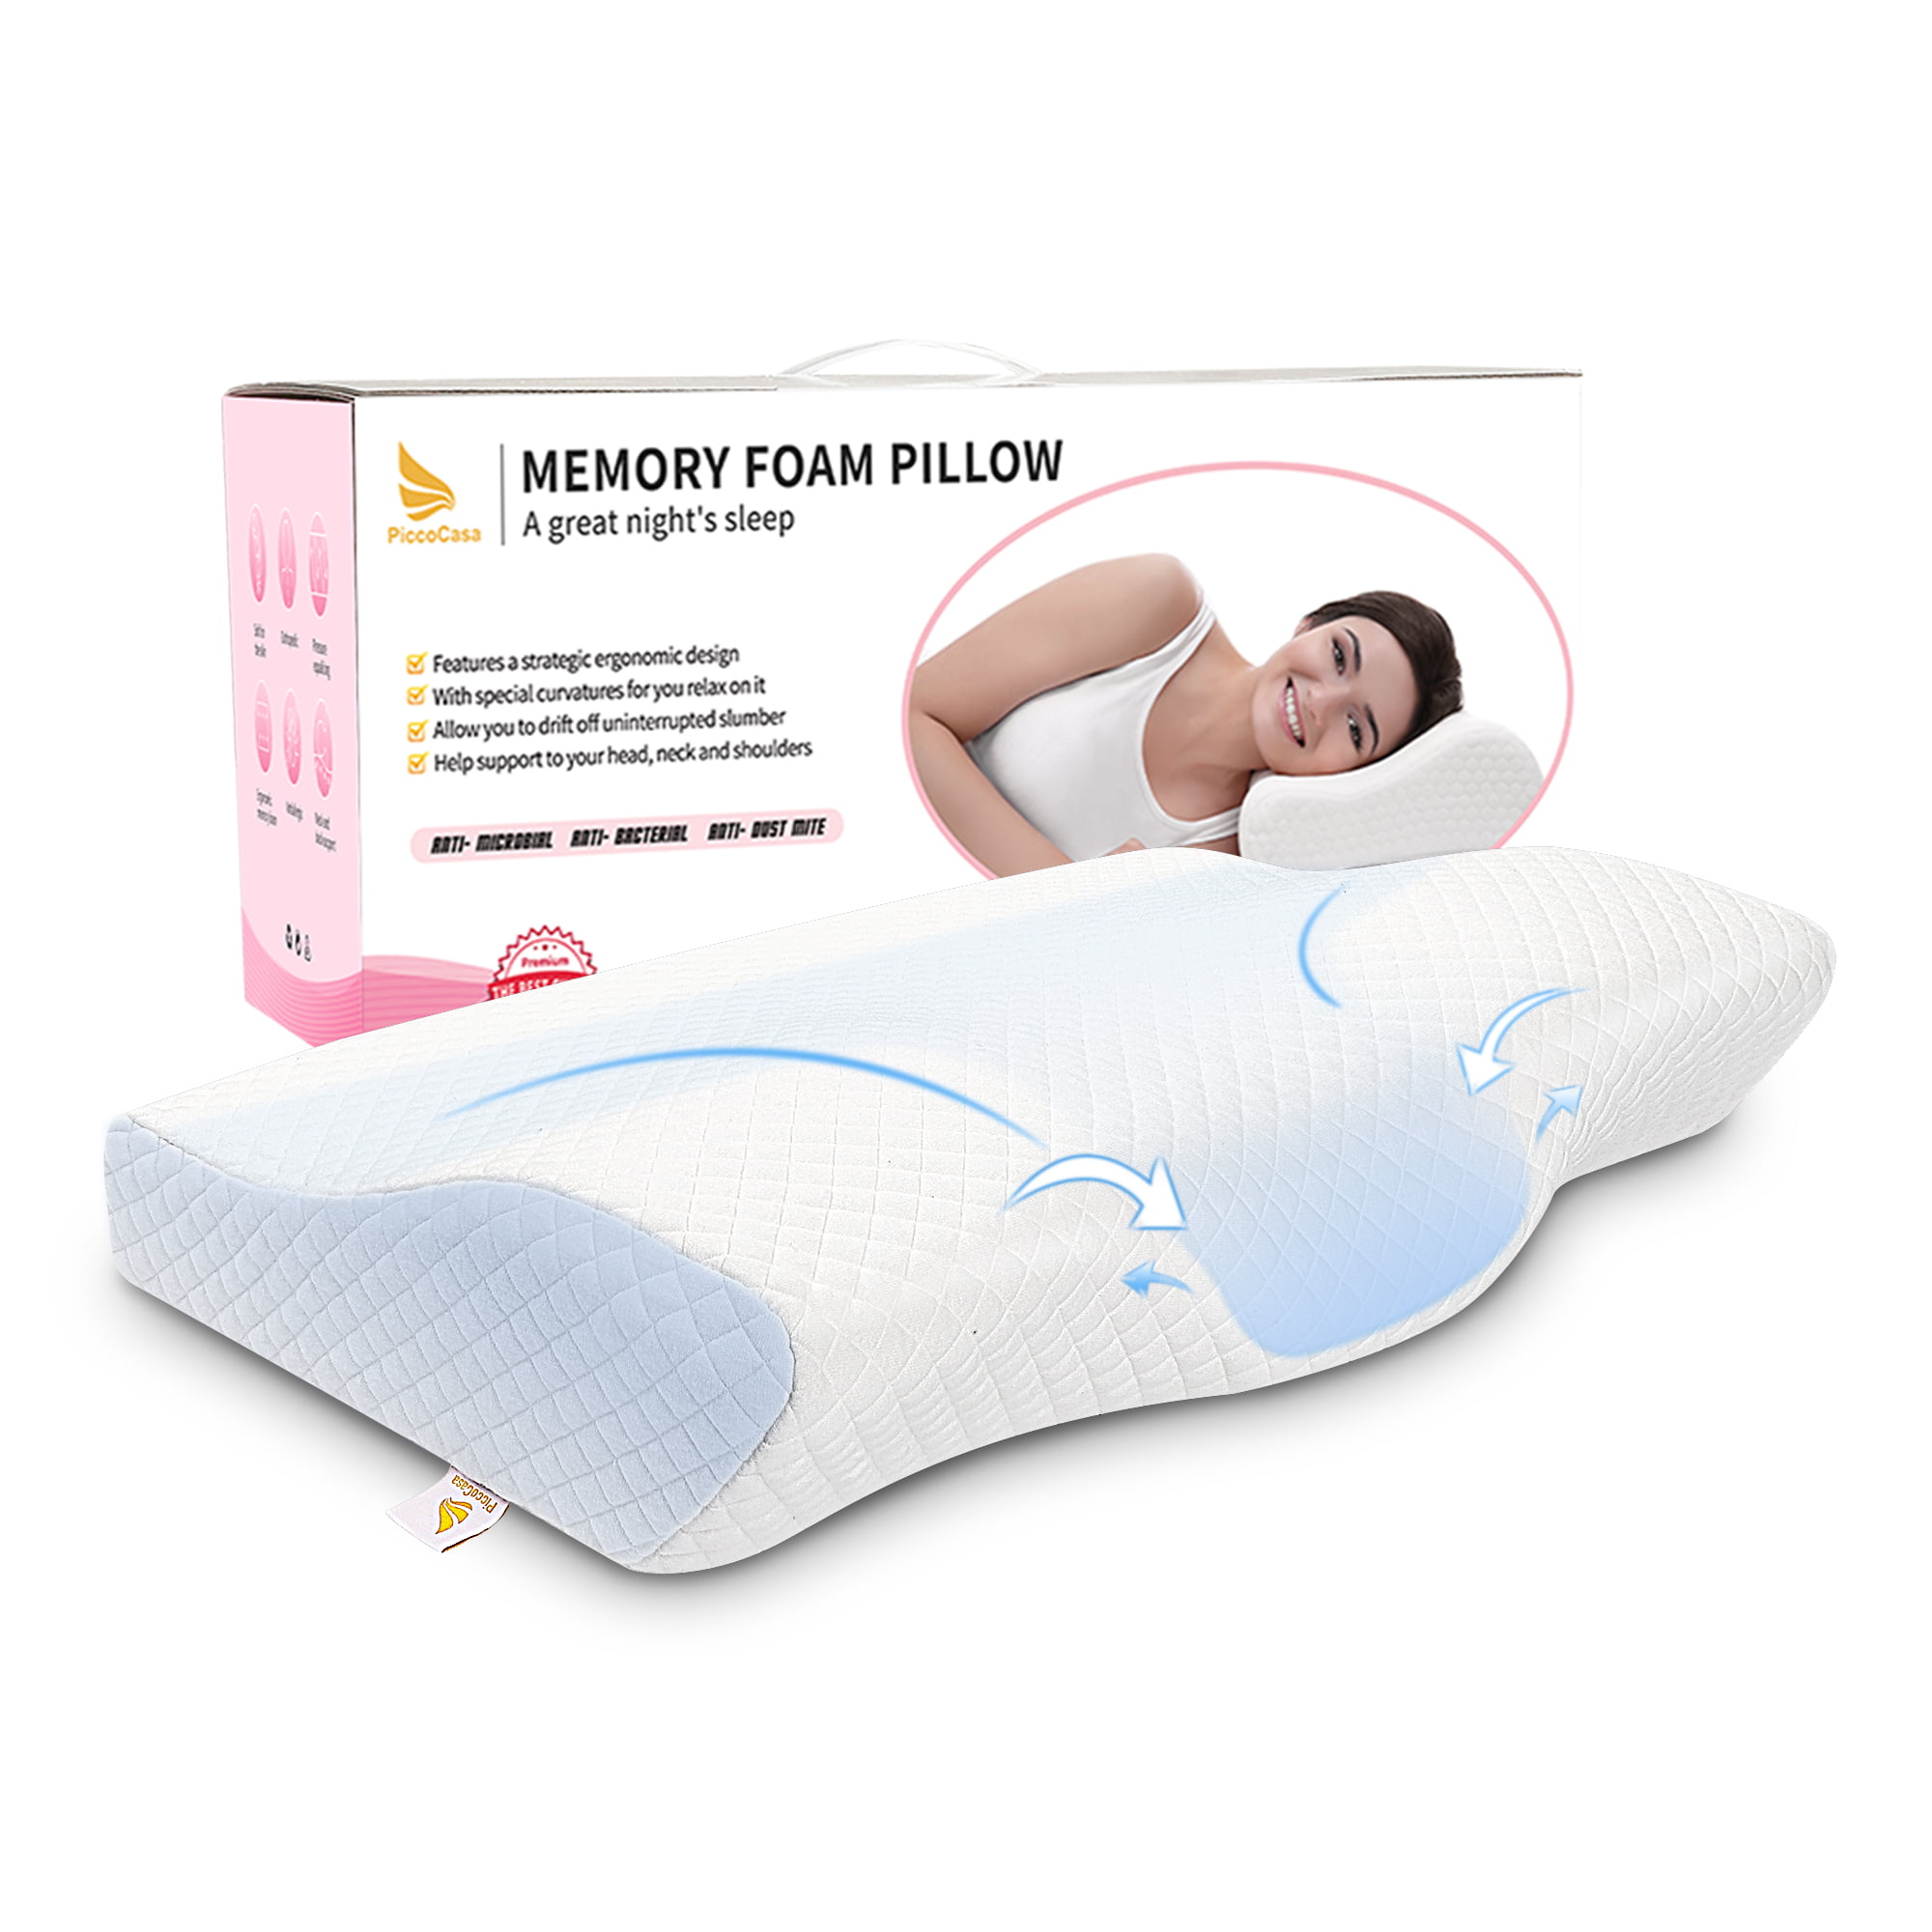 Neck Head Support Memory Foam Firm Contour Pillow Orthopaedic Pillows Good Sleep